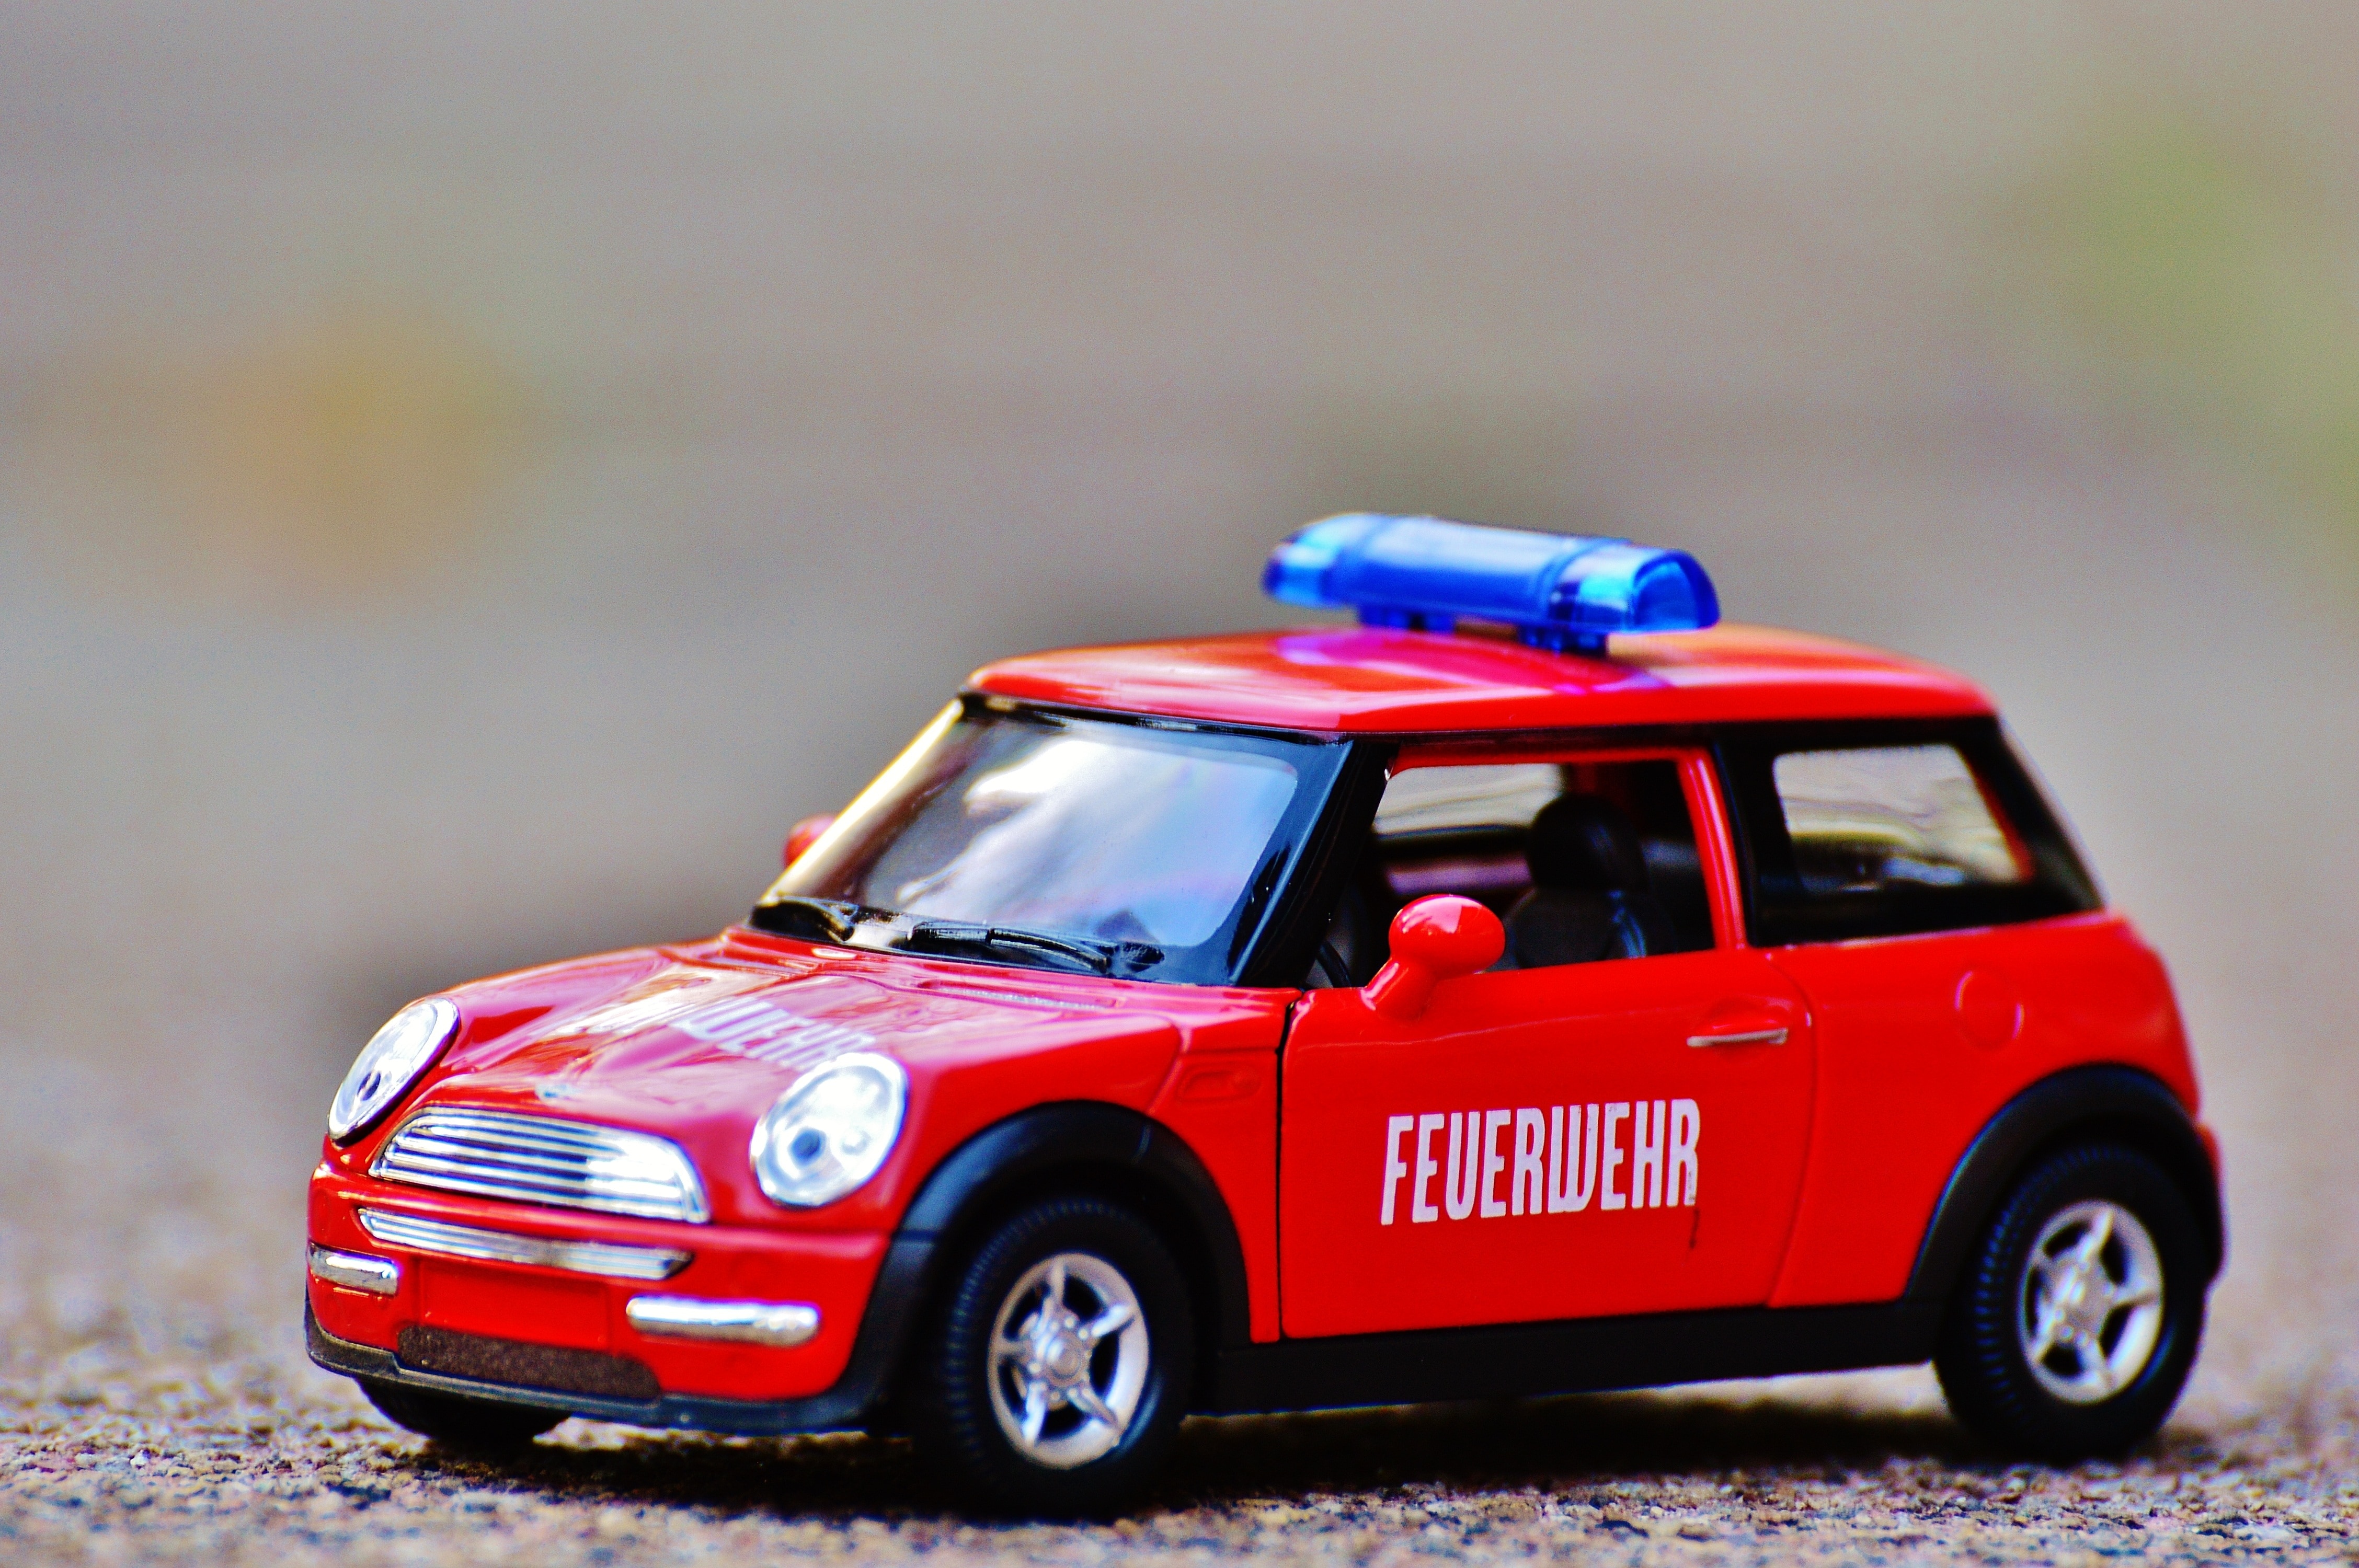 Mini Cooper, Red, Fire, Model Car, Auto, red, car